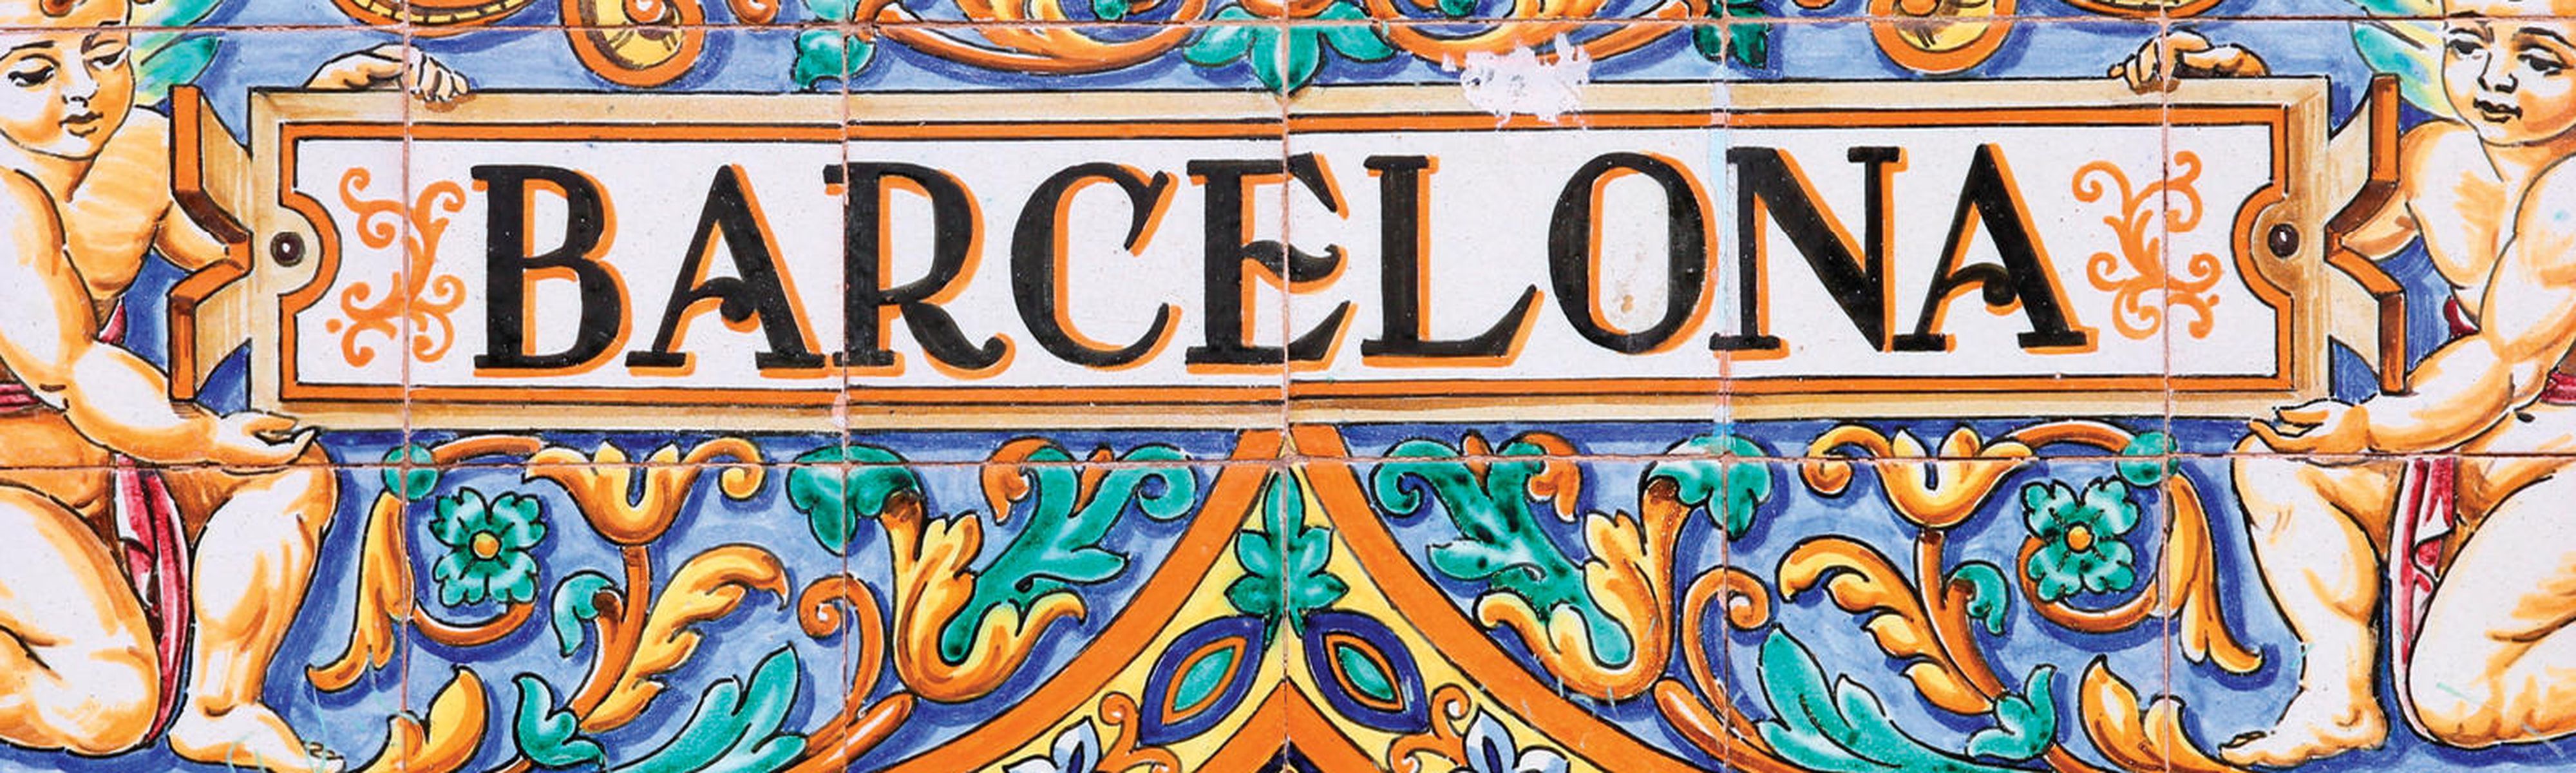 colorful blue tiles reading barcelona